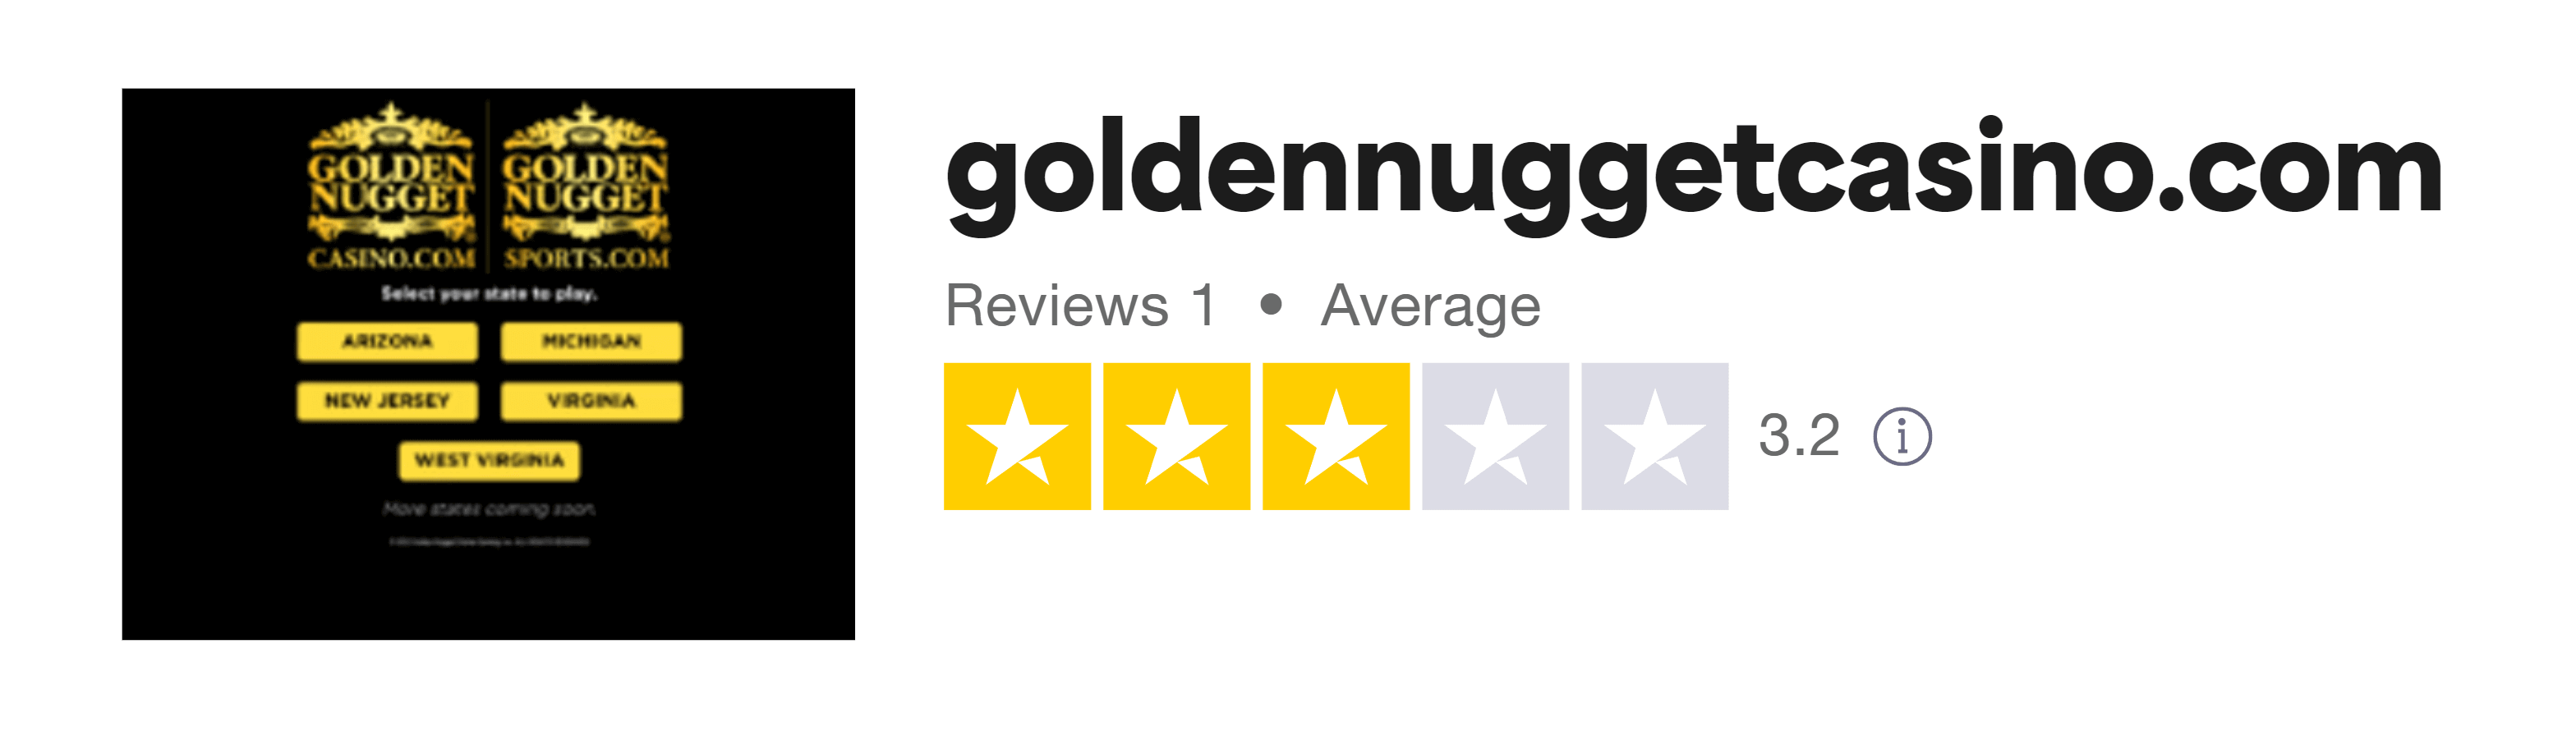 Trustpilot rating screenshot for the Golden Nugget NJ